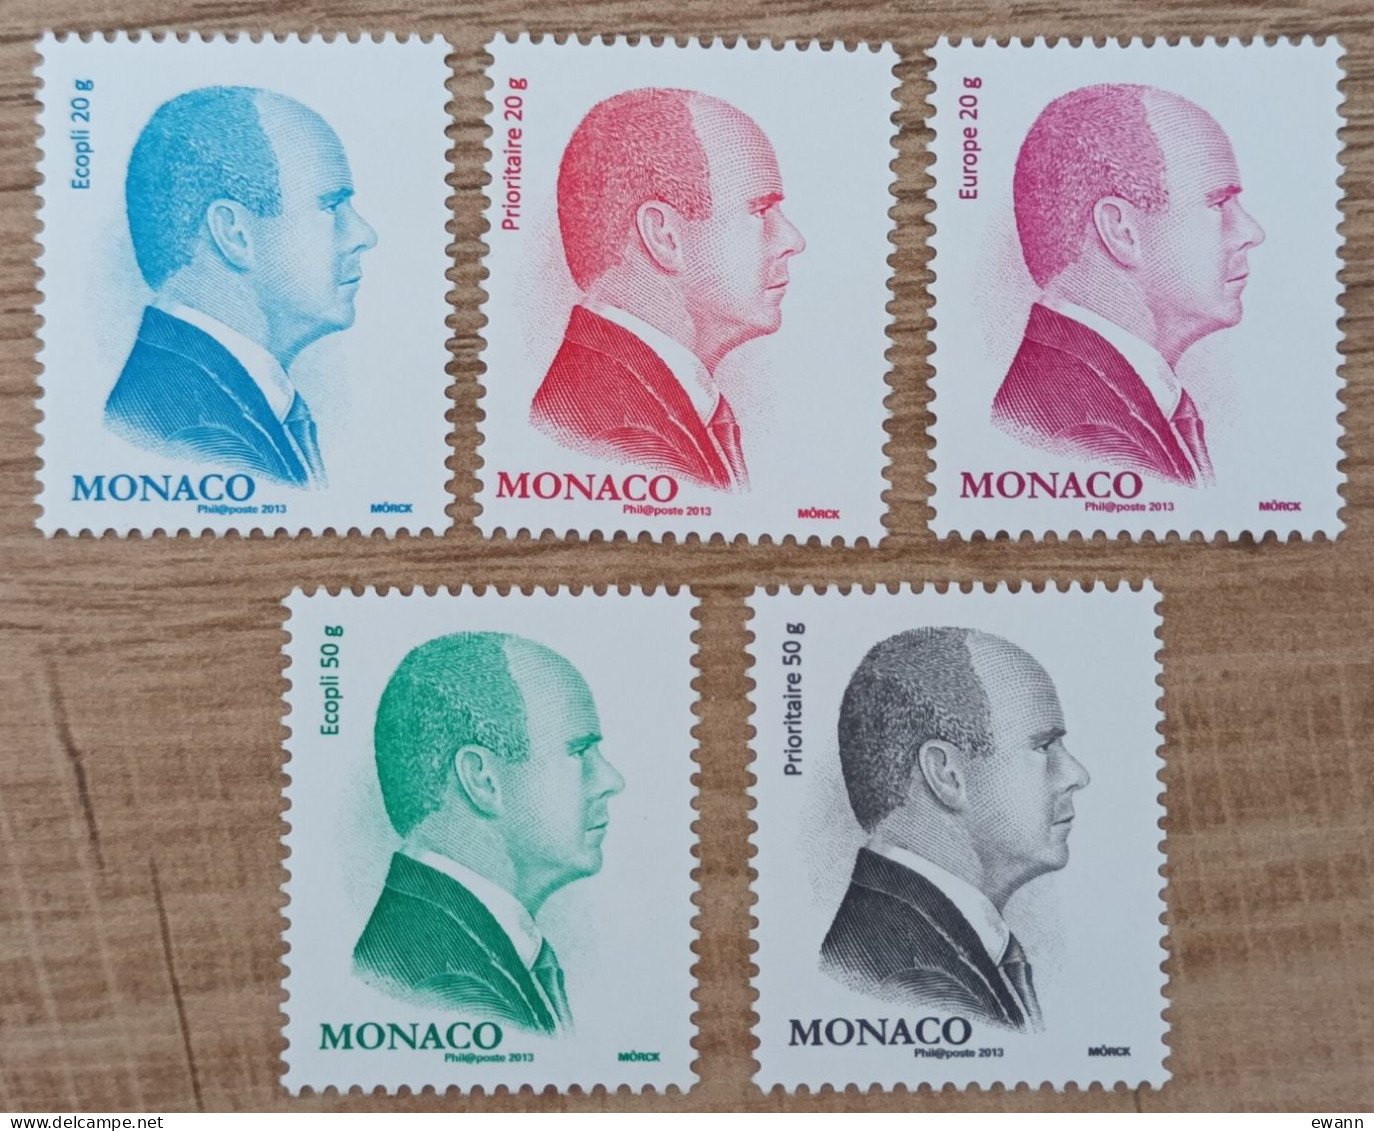 Monaco - YT N°2851 à 2855 - S.A.S. Le Prince Albert II - 2012 - Neufs - Unused Stamps